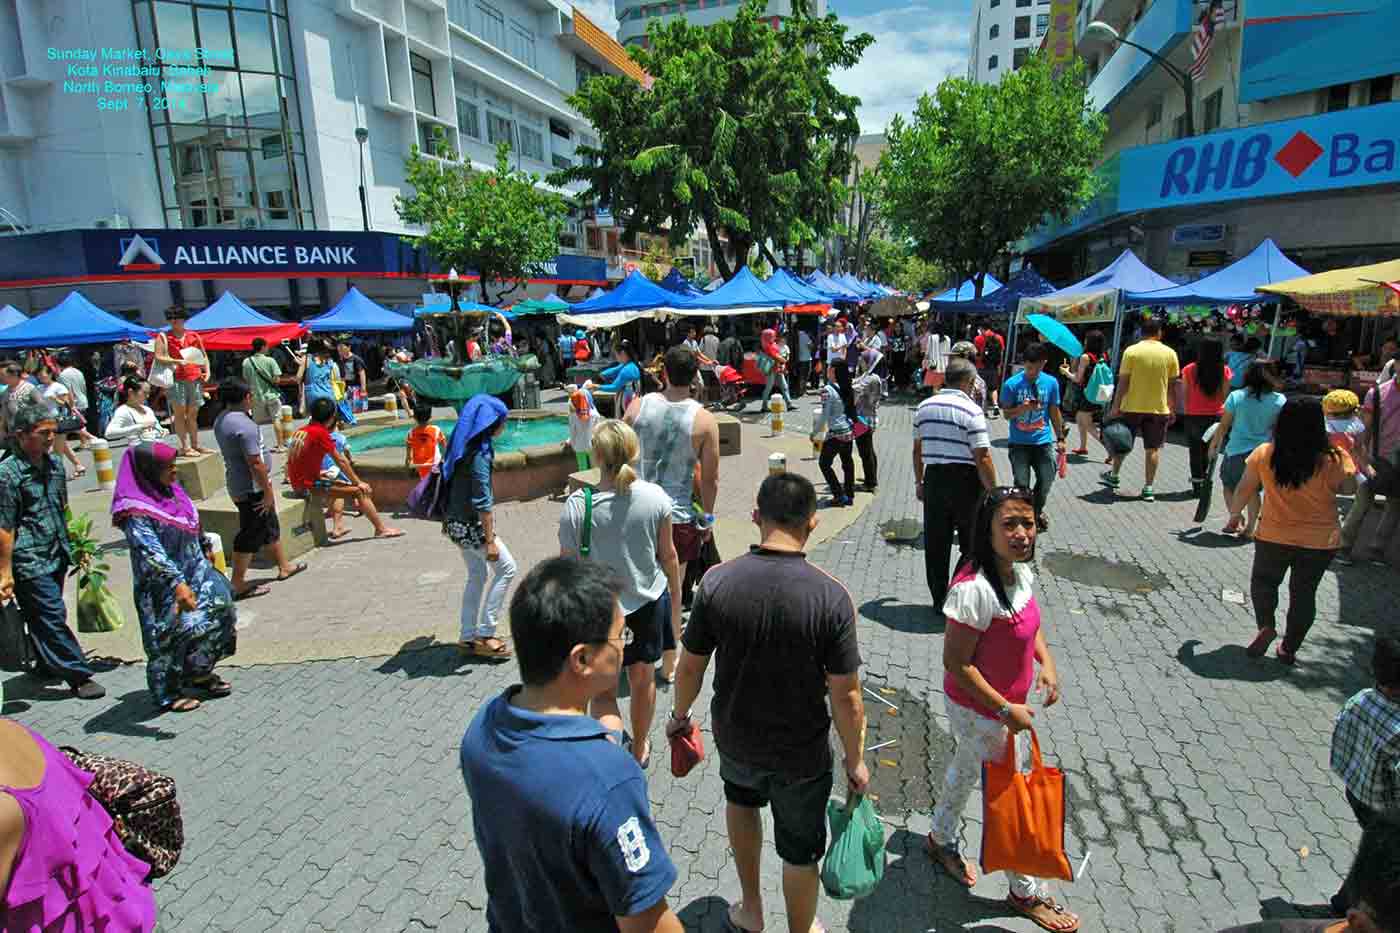 Gaya Street Sunday Market